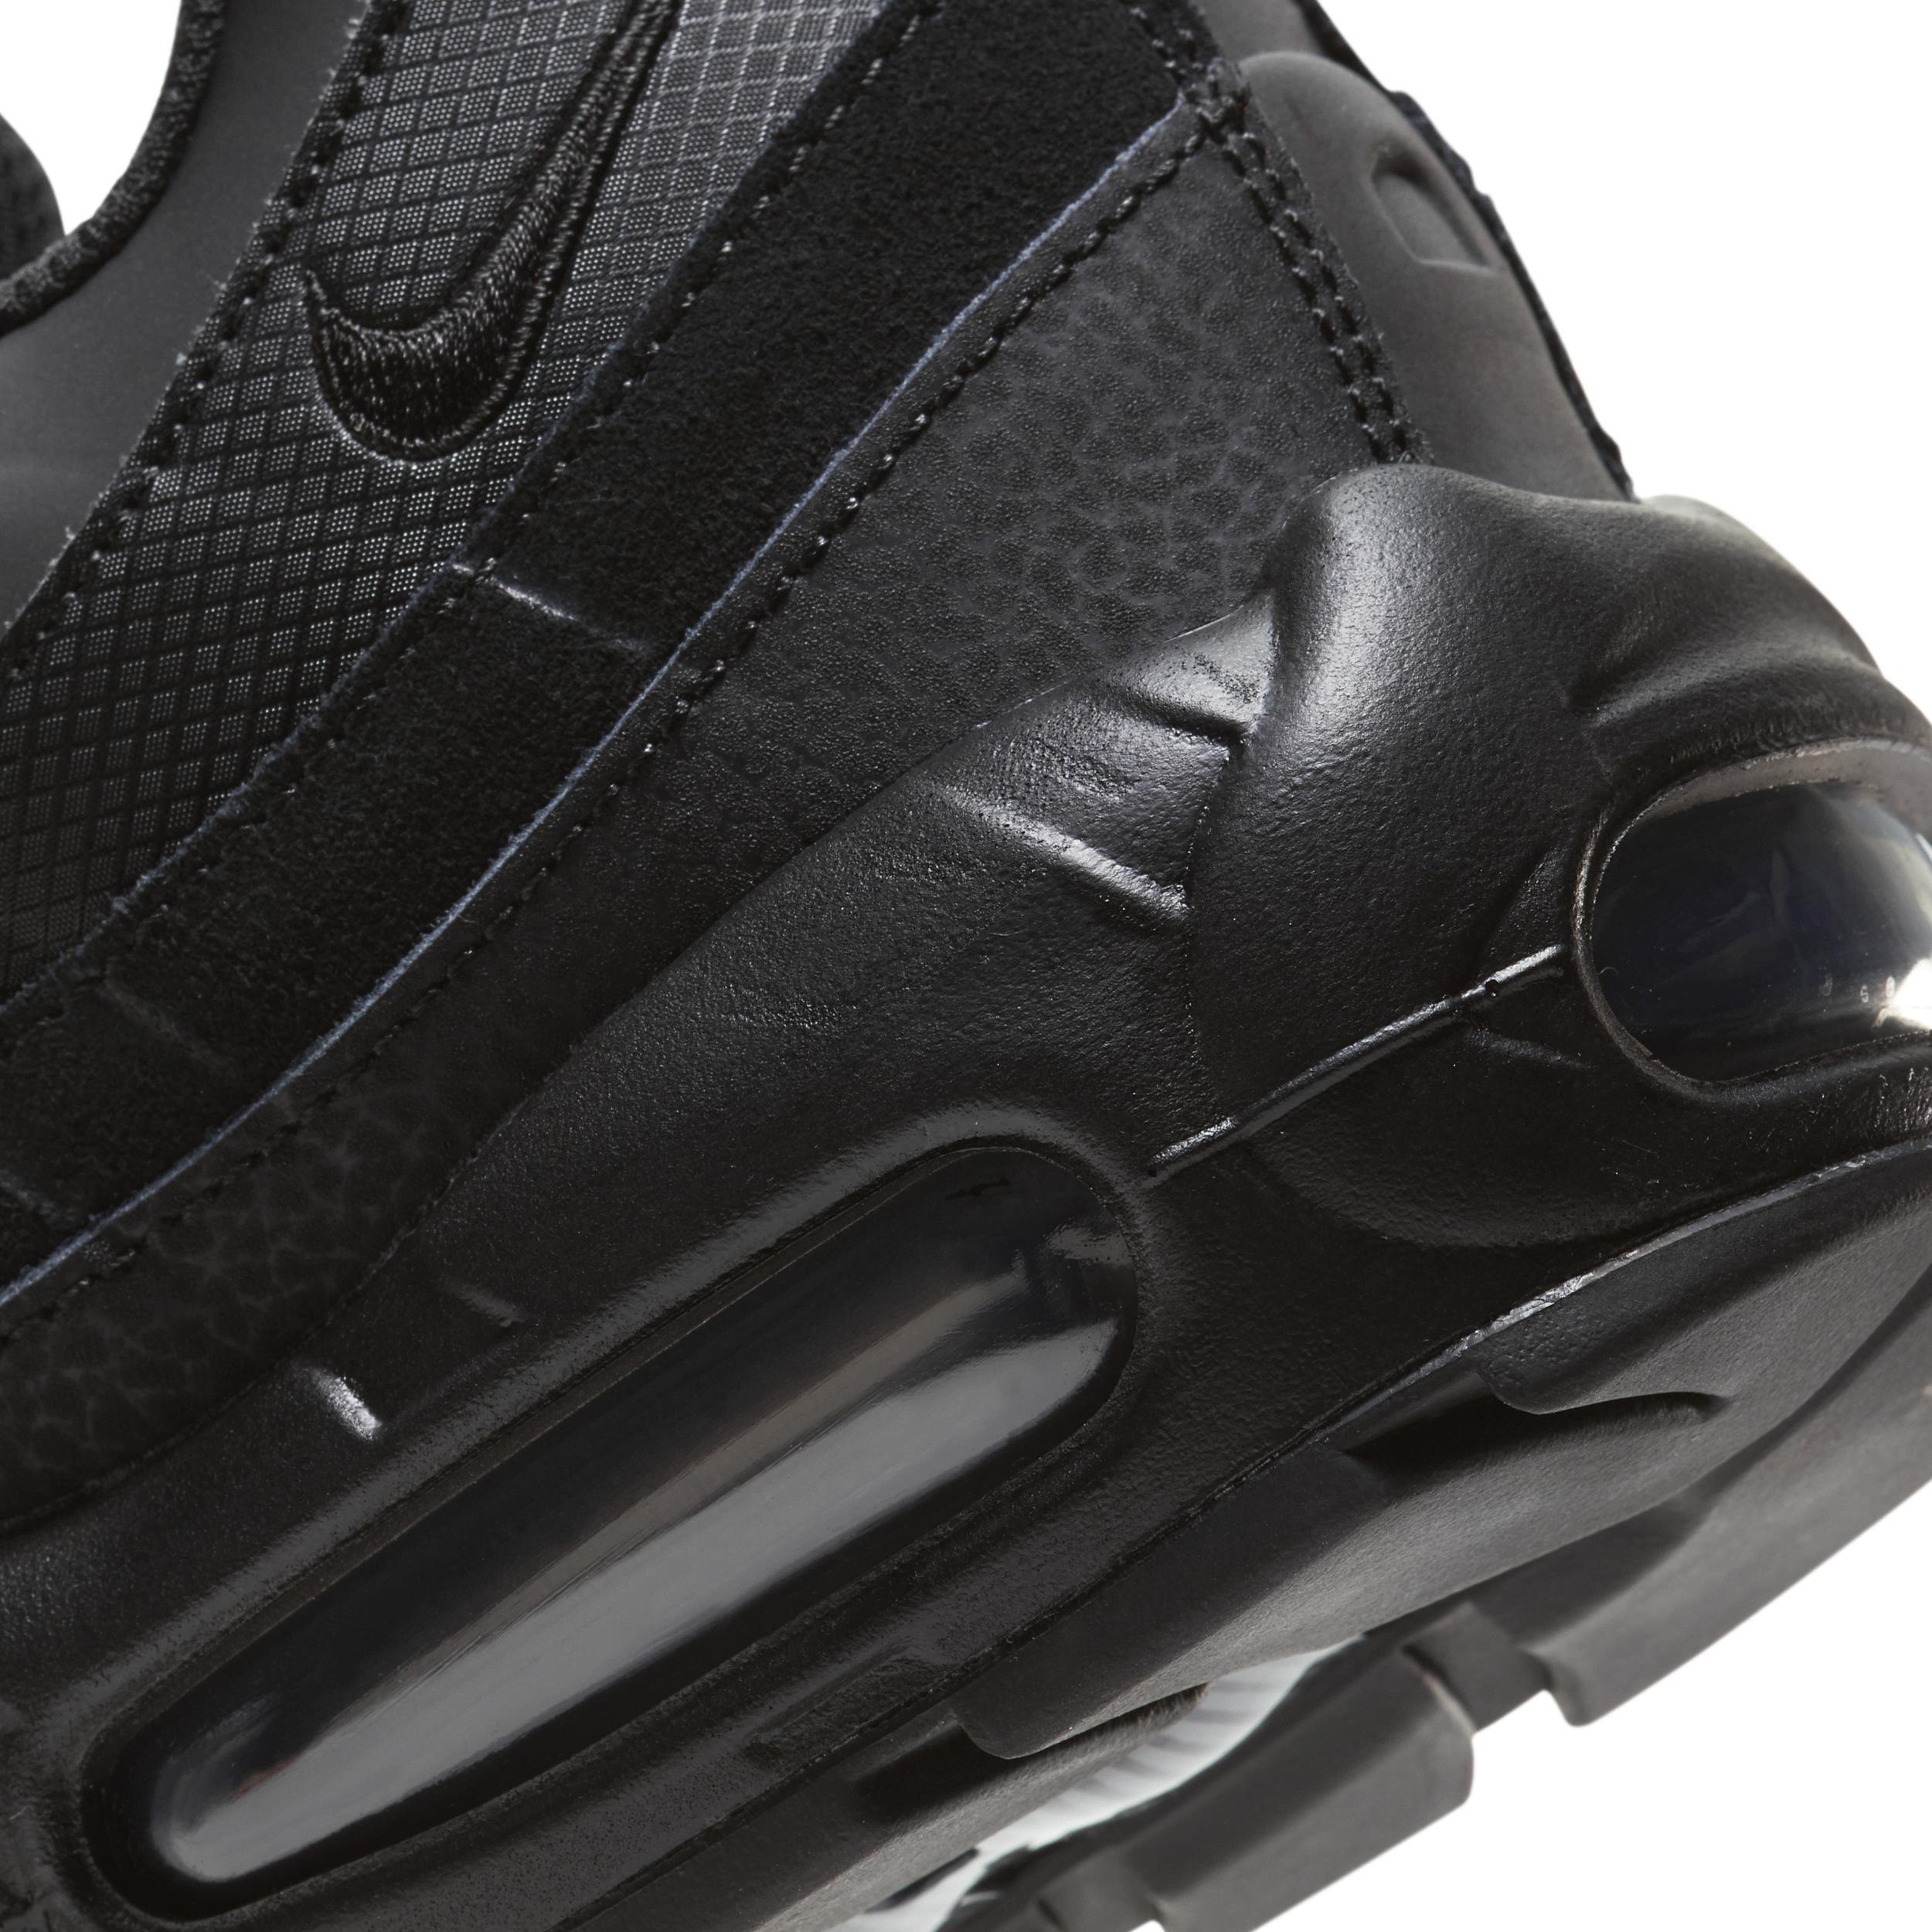 Nike Mens Nike Air Max 95 - Mens Running Shoes Black/Black/Dark Grey Product Image